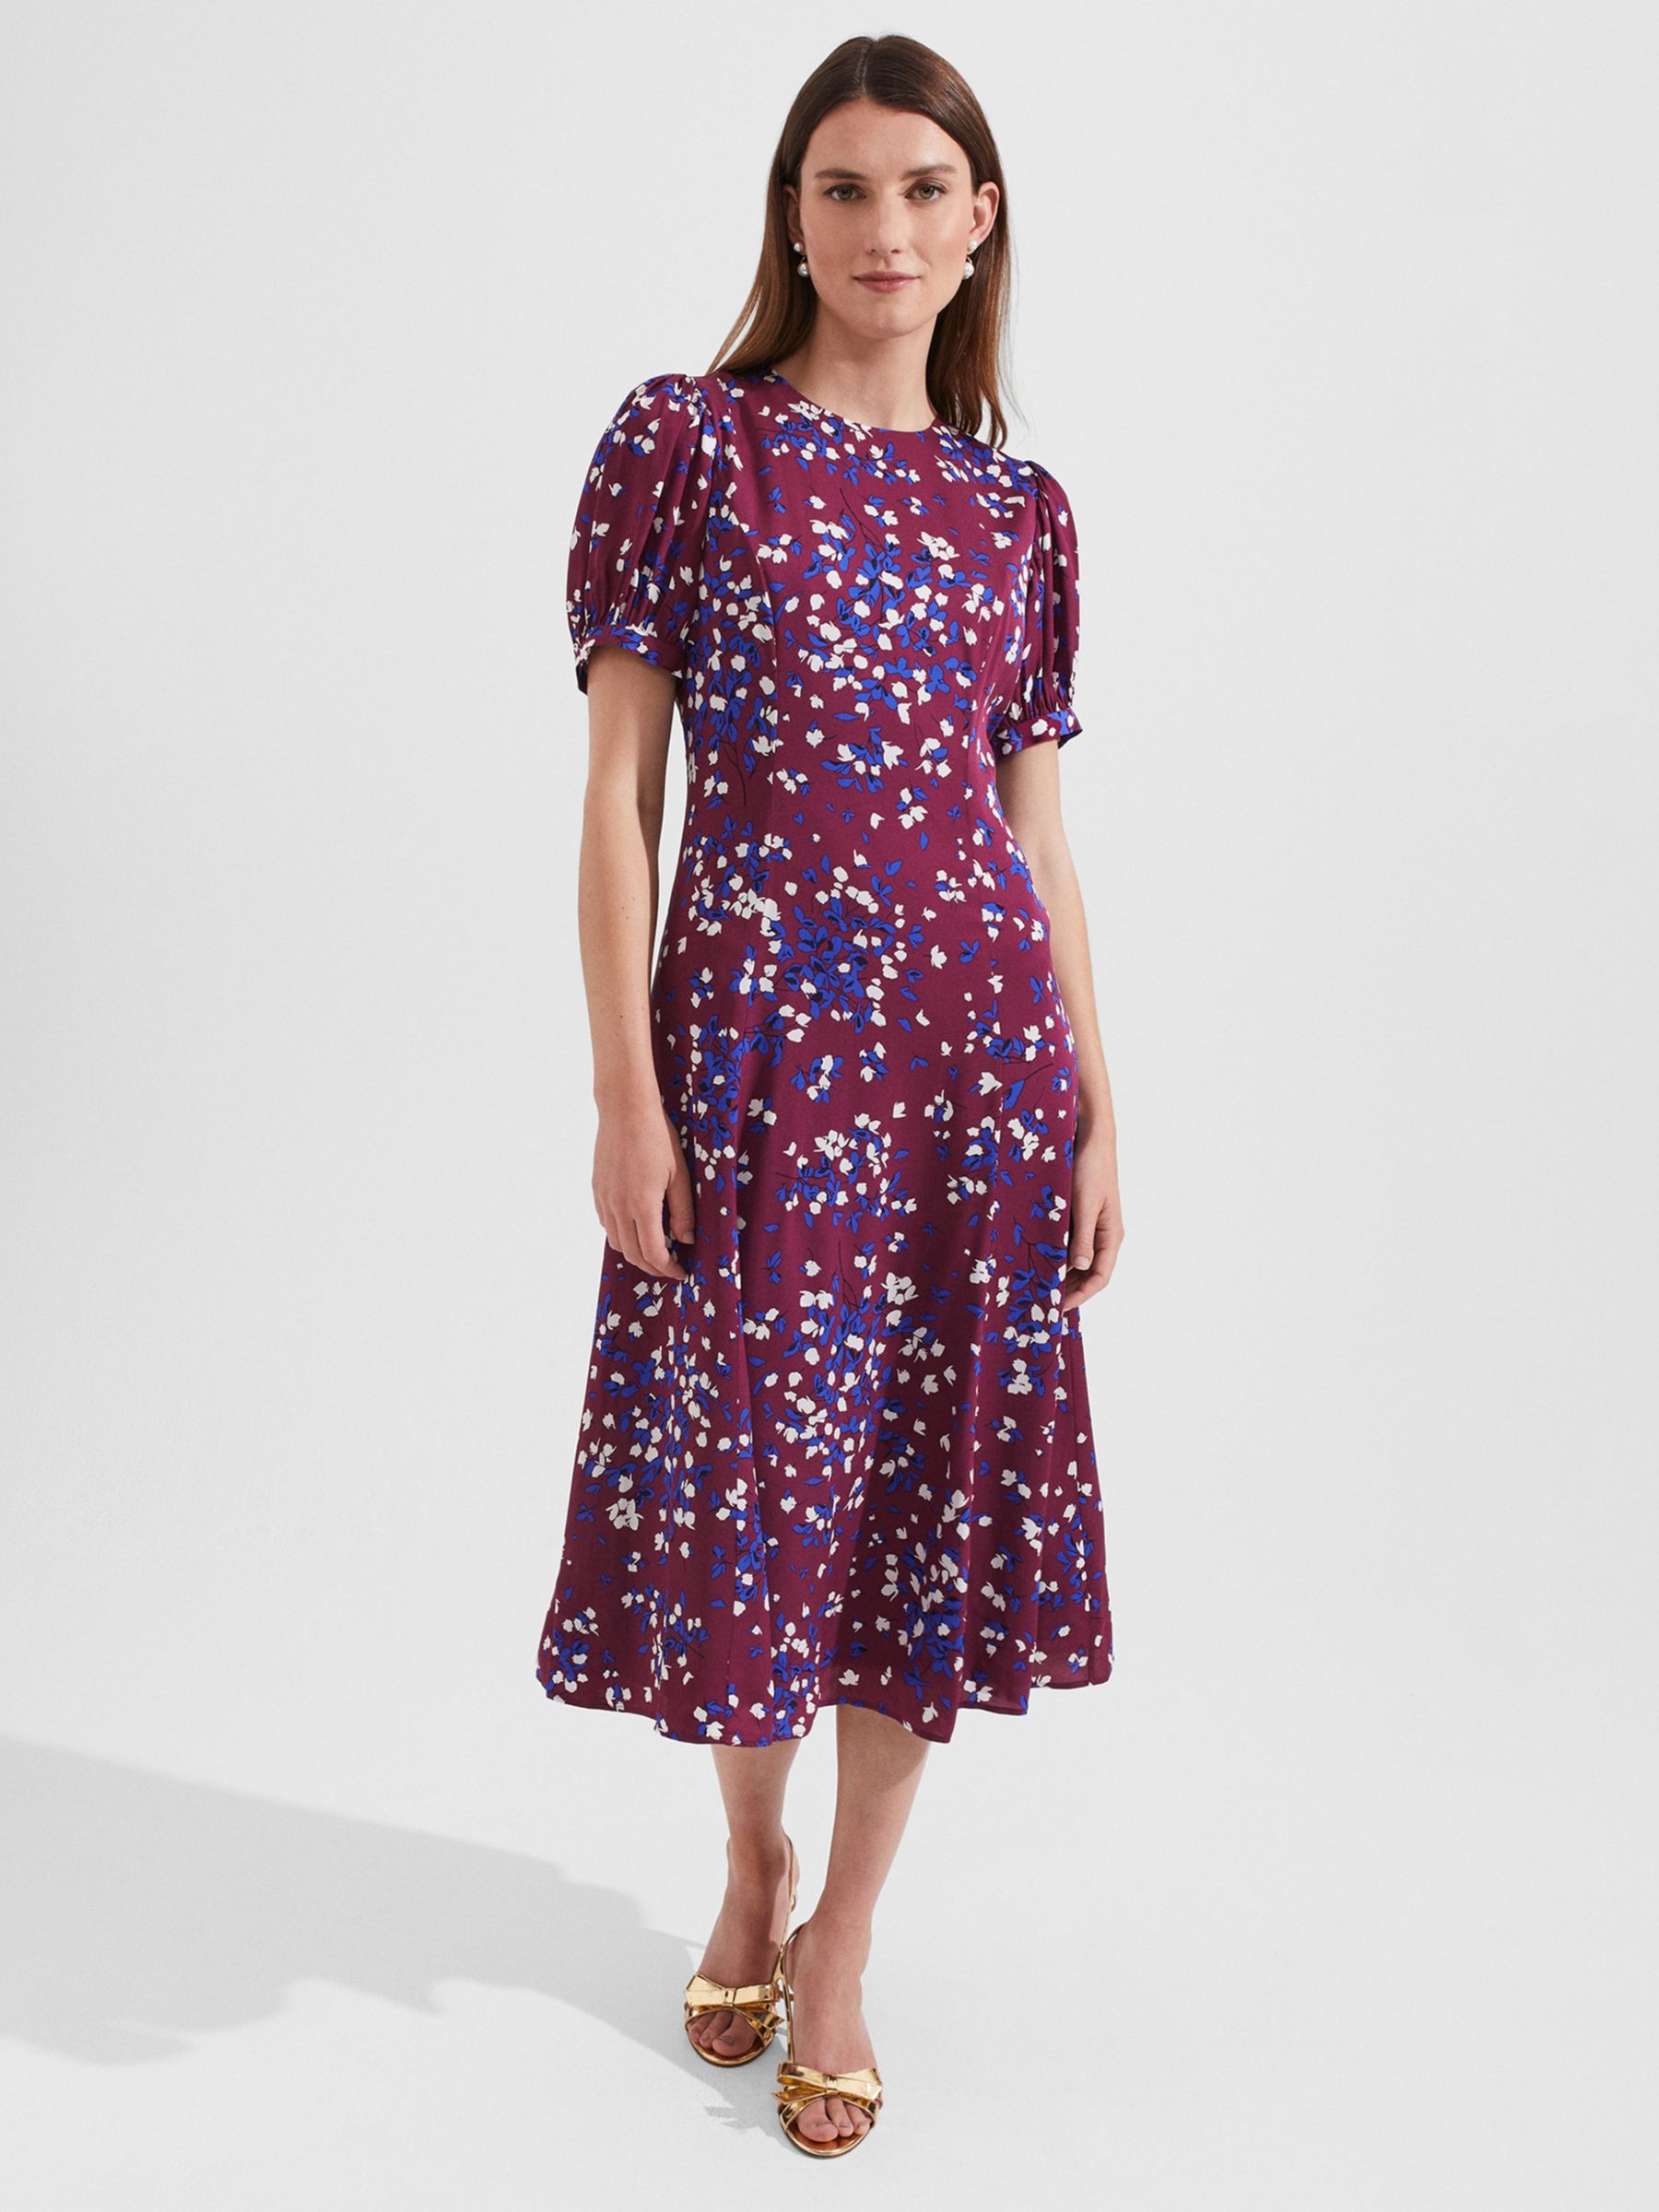 Hobbs Rochelle Floral Dress, Purple/Multi at John Lewis & Partners